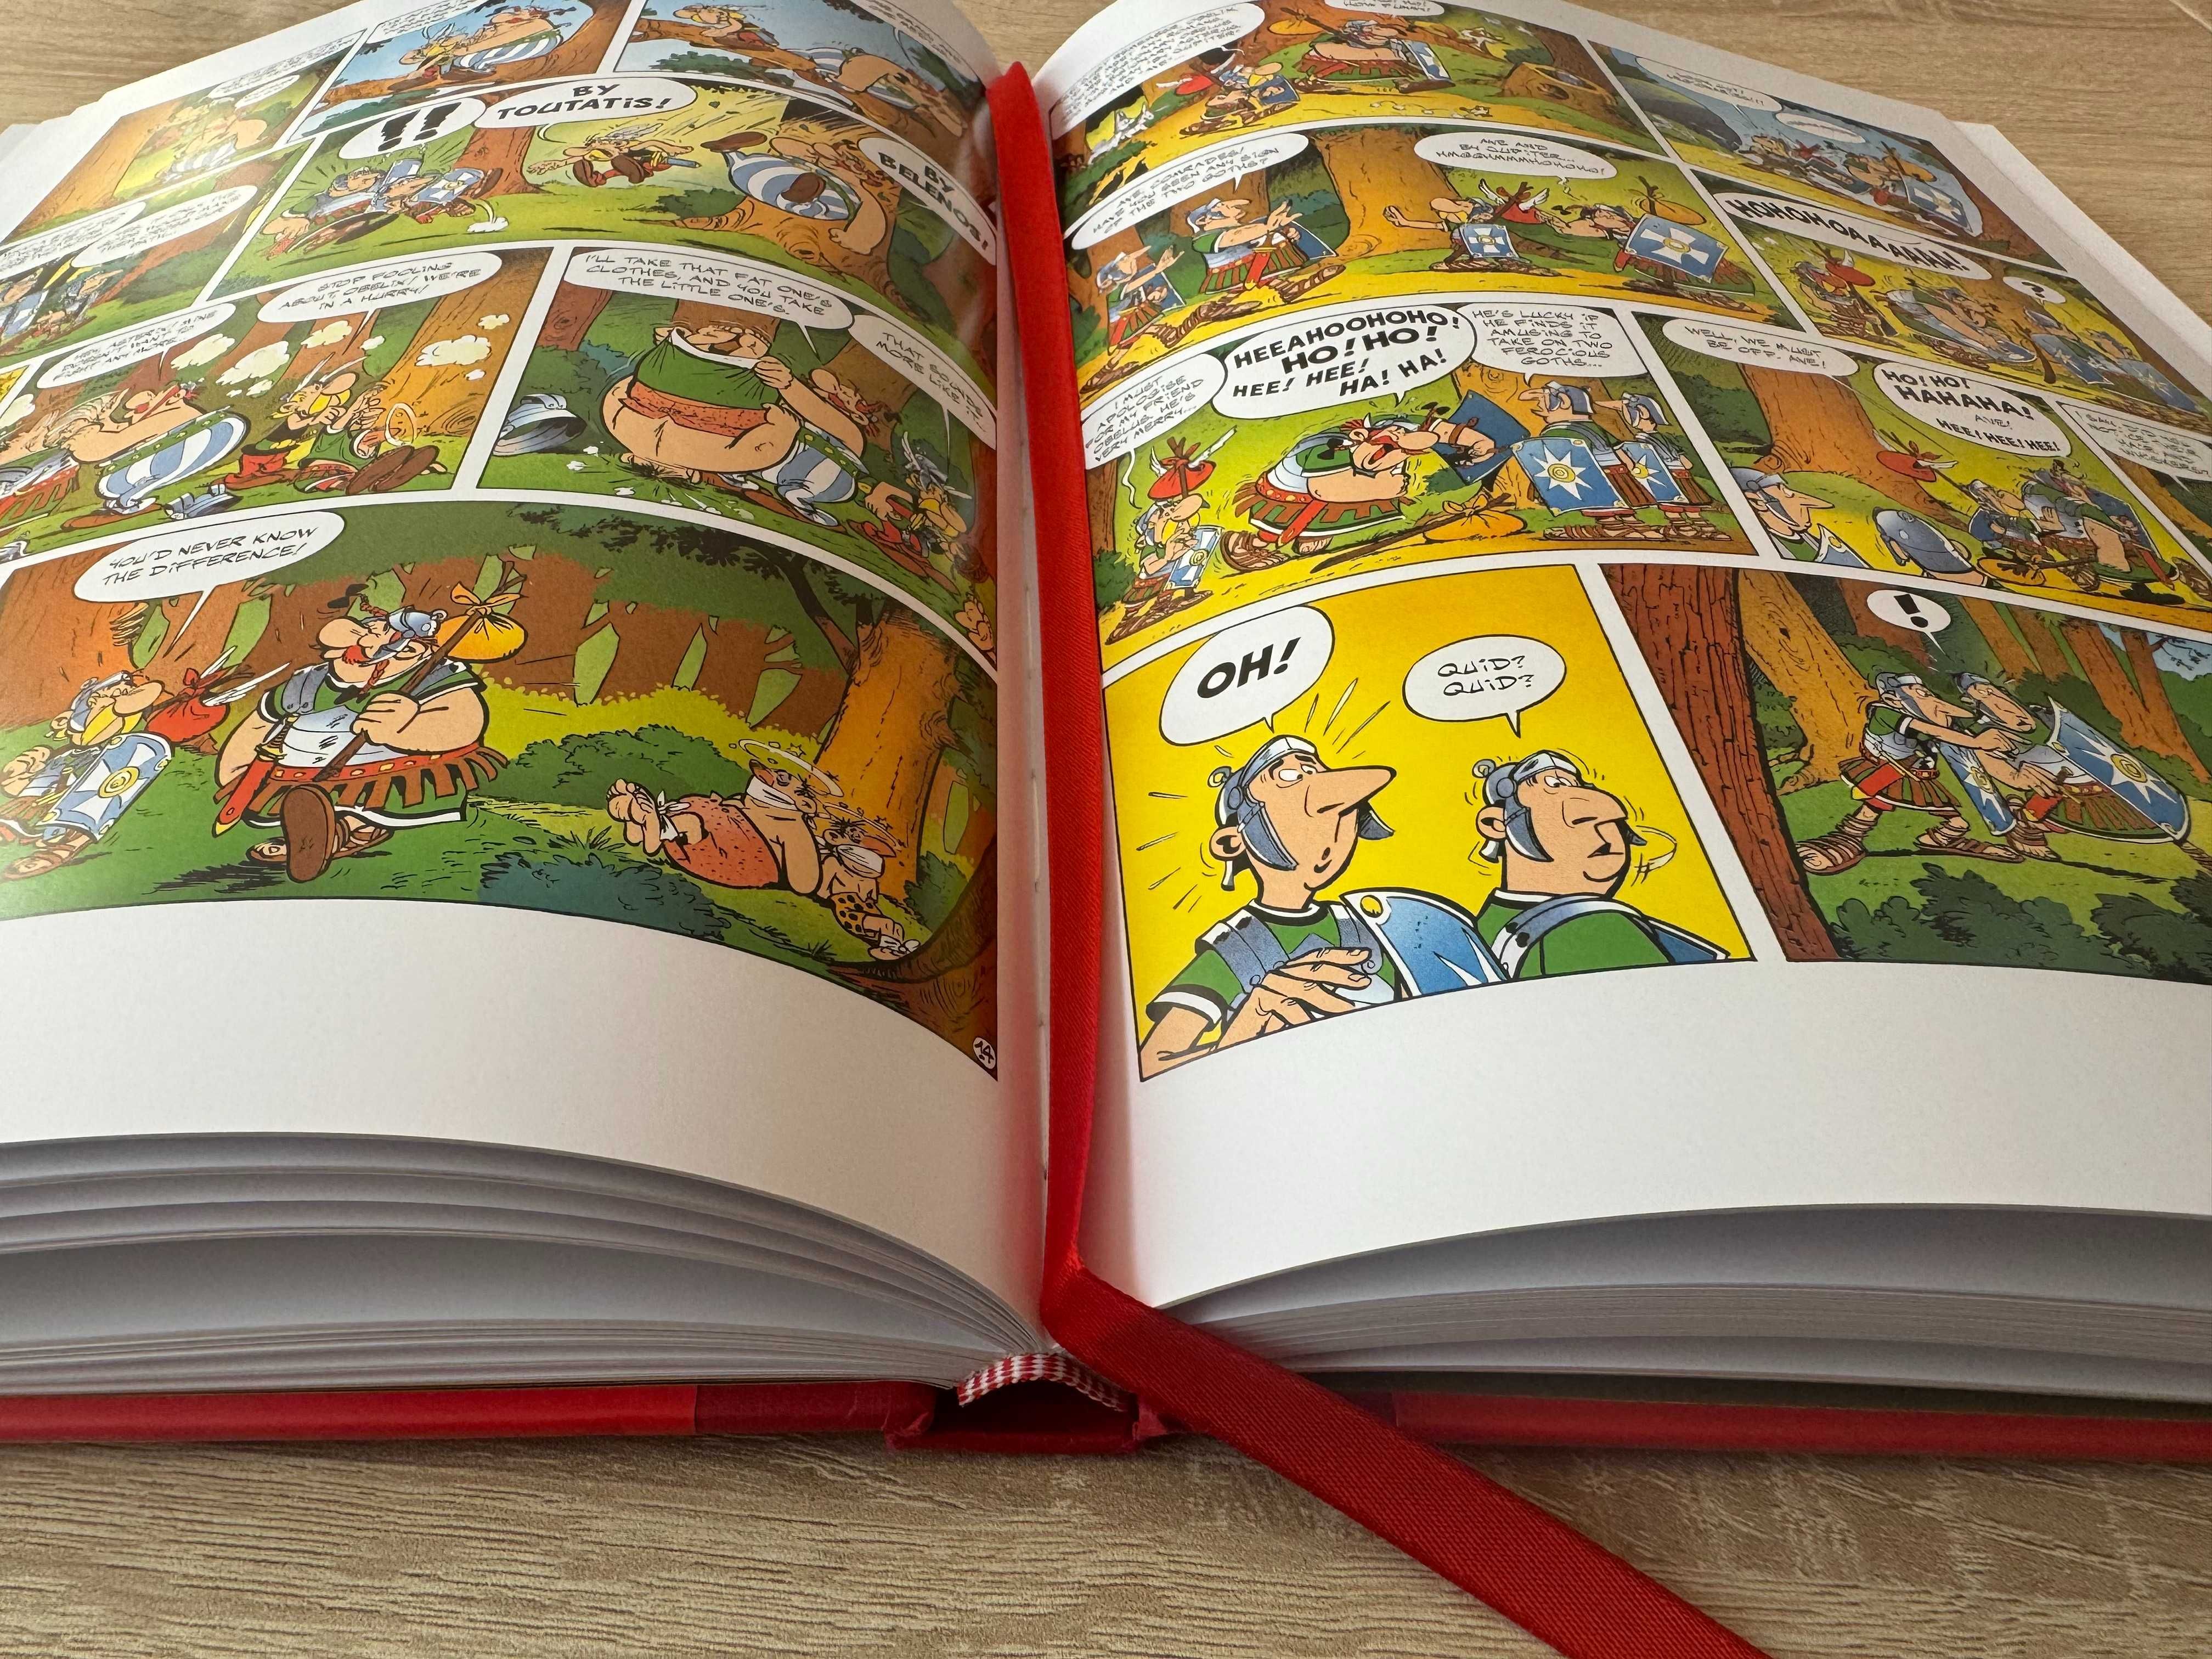 комикс Asterix Gift Edition: Albums 1-5